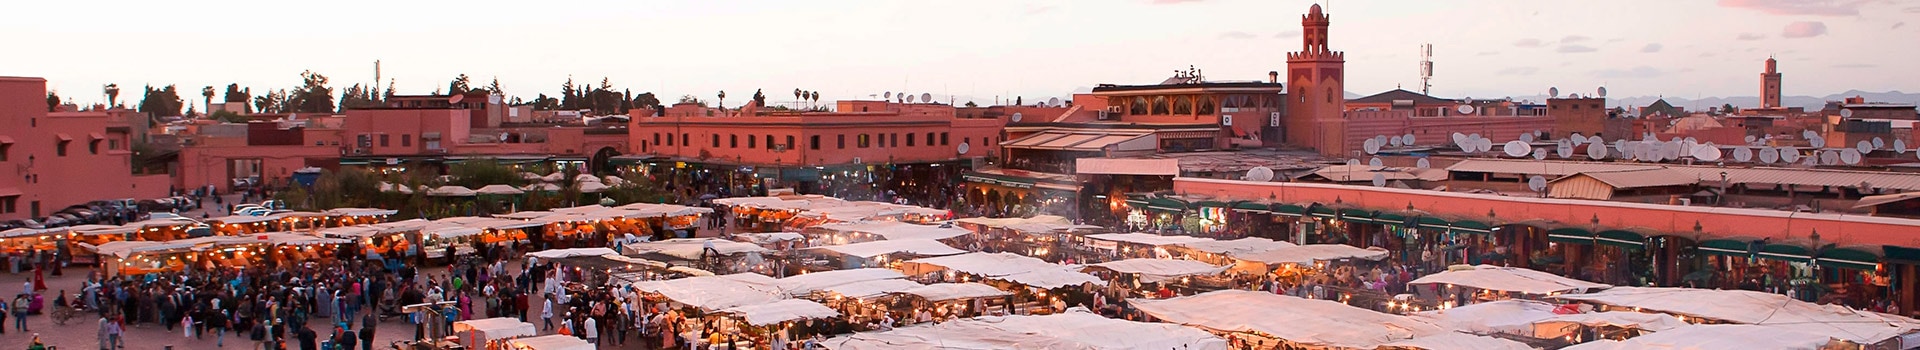 London - Marrakech